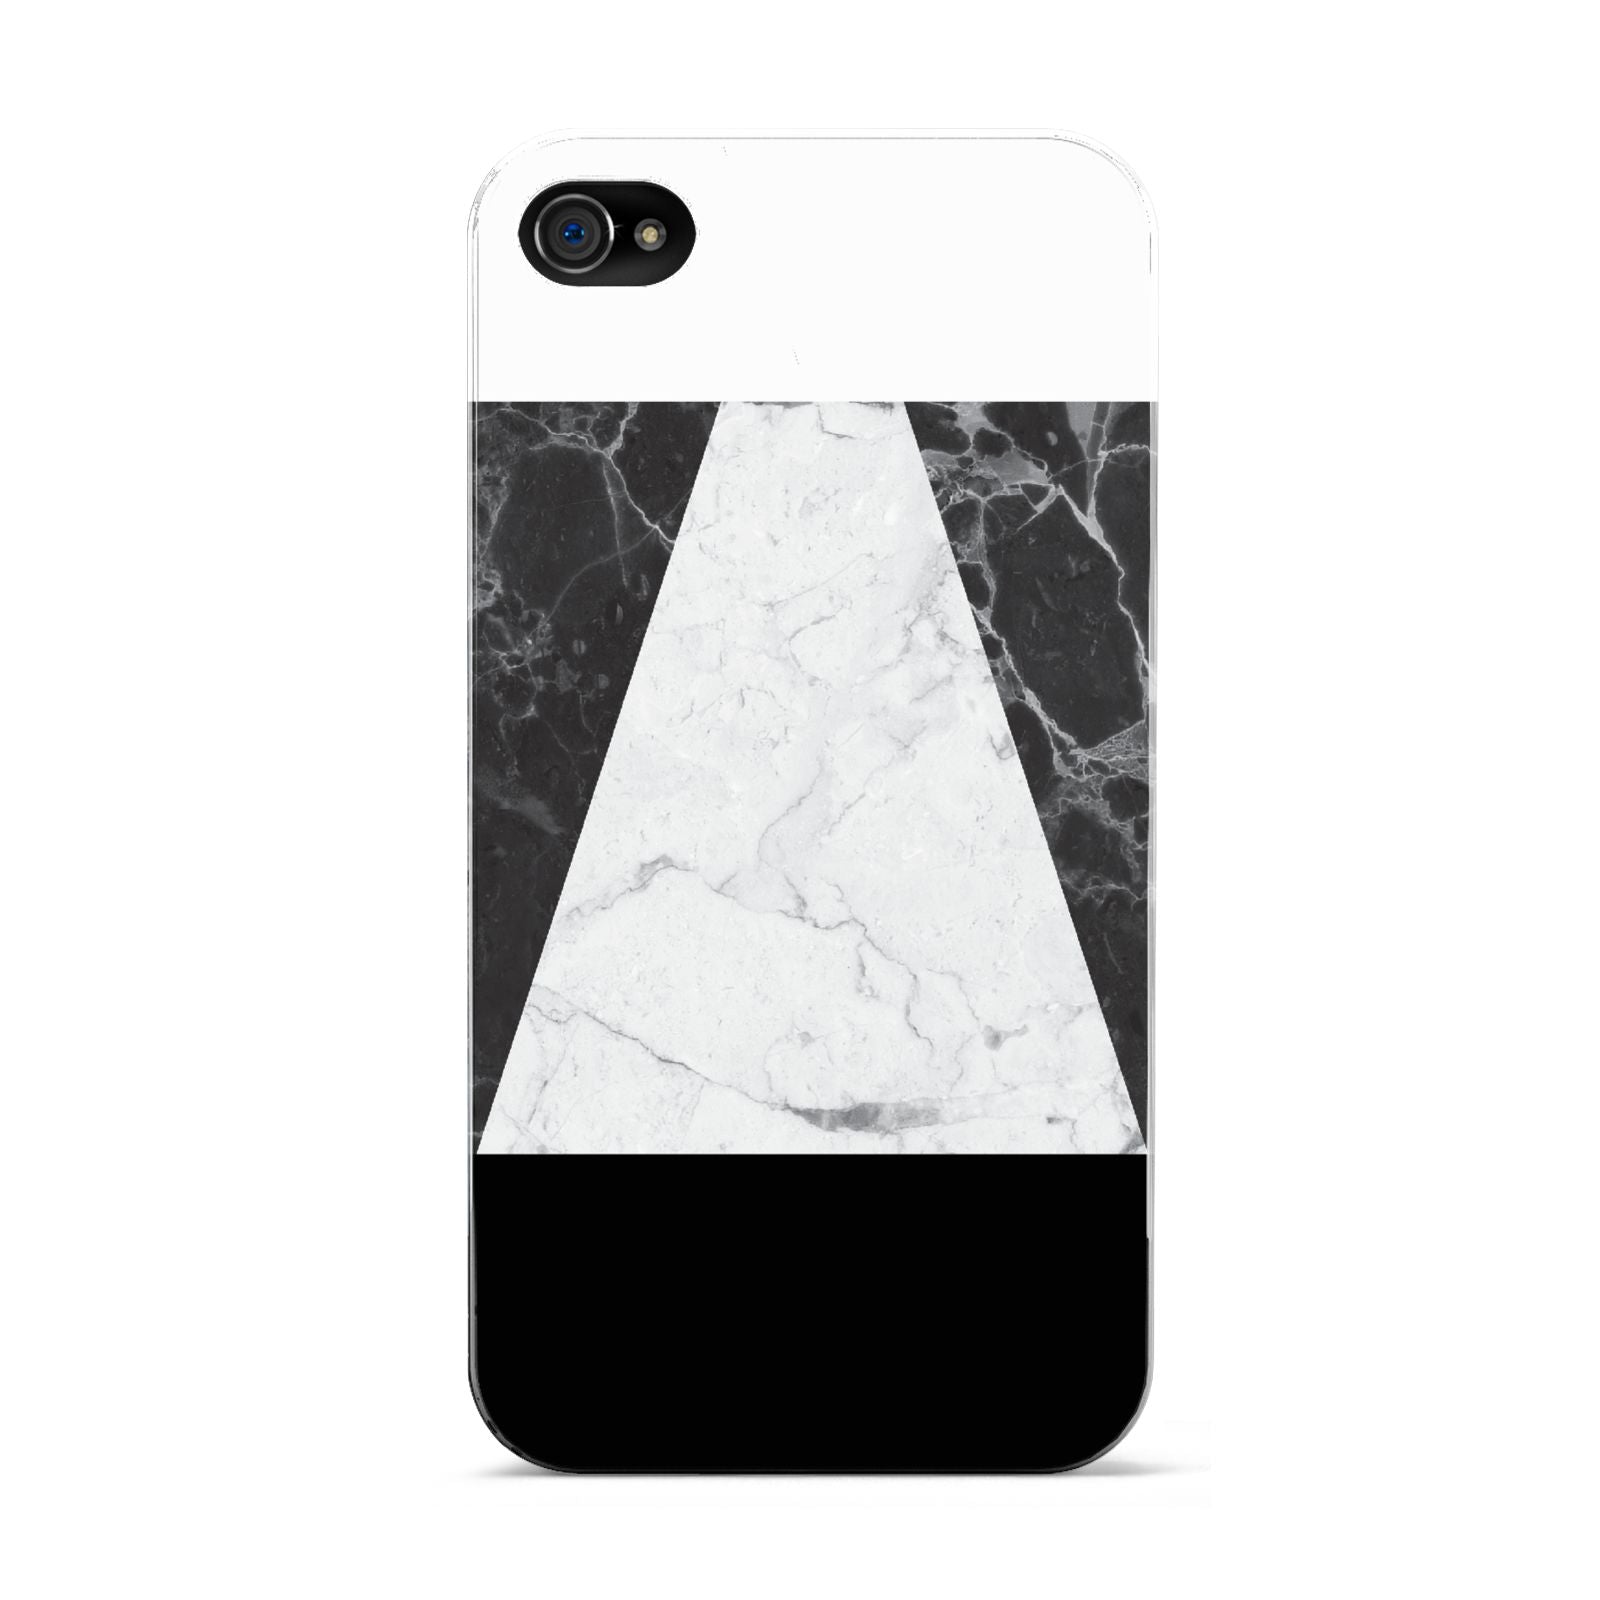 Marble White Black Apple iPhone 4s Case